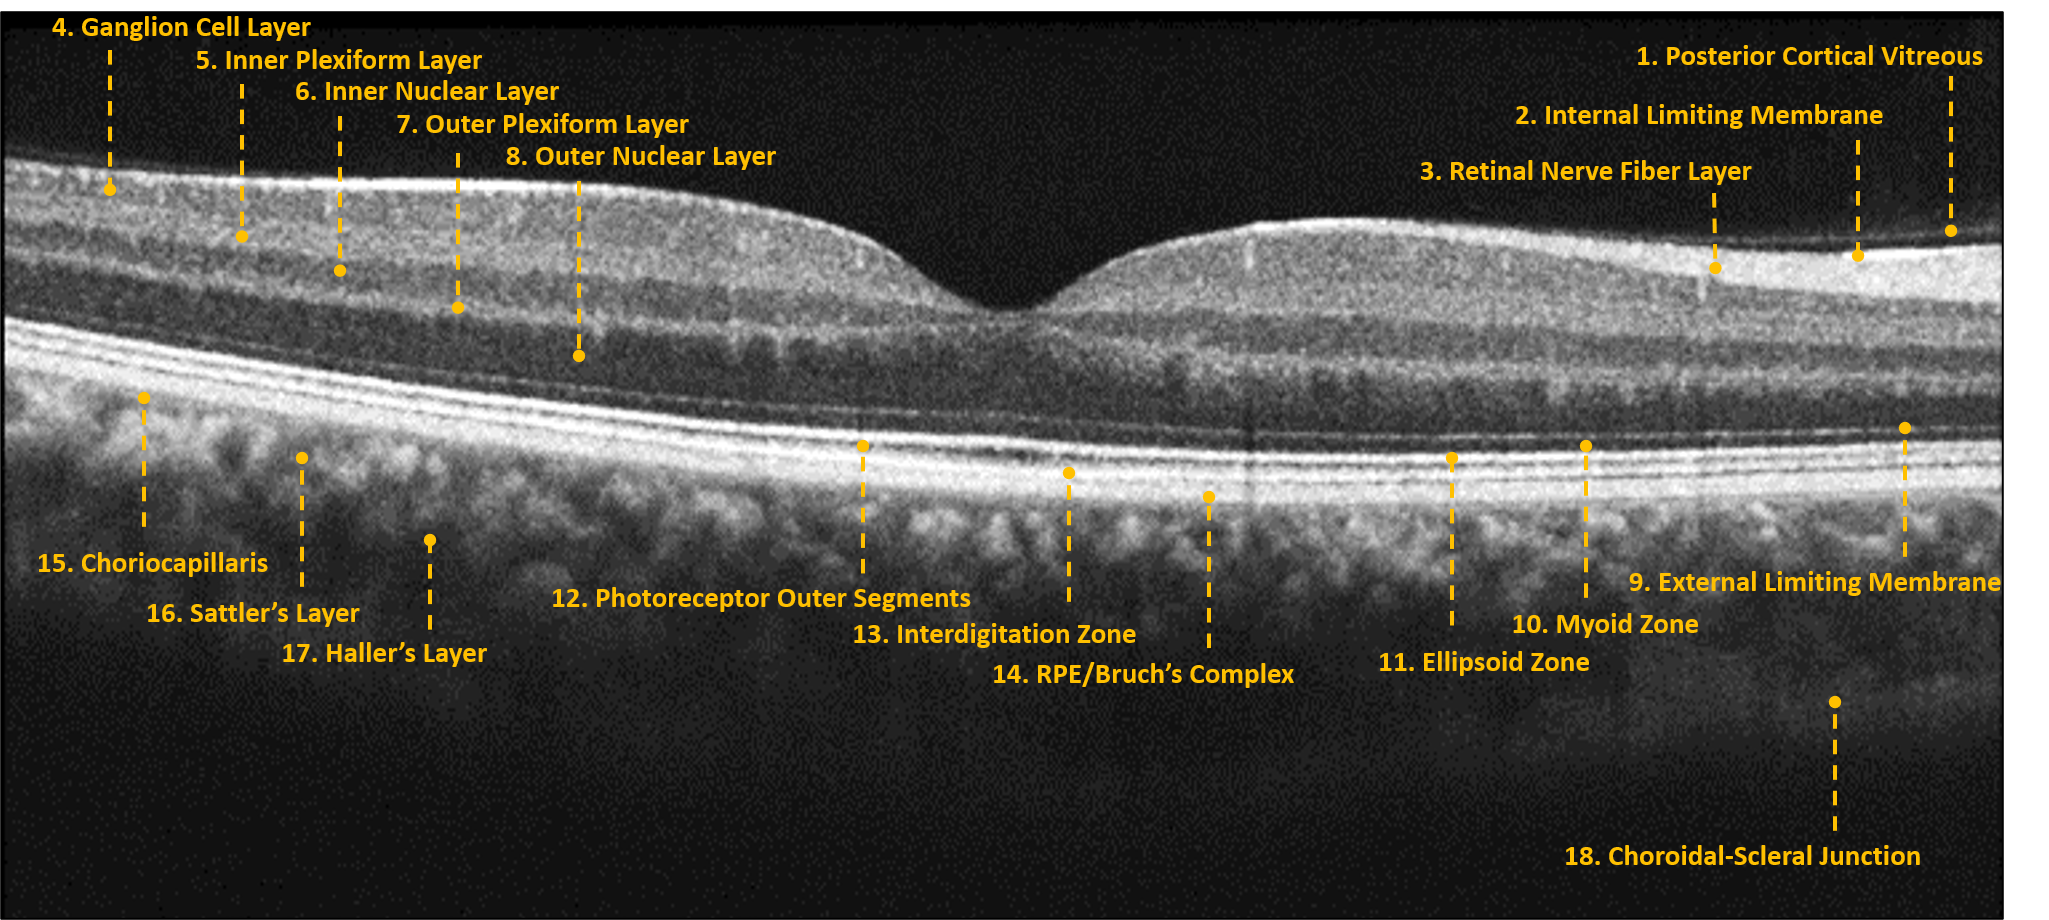 Into the Woods: Interpreting OCT Imaging in Retinal Disease